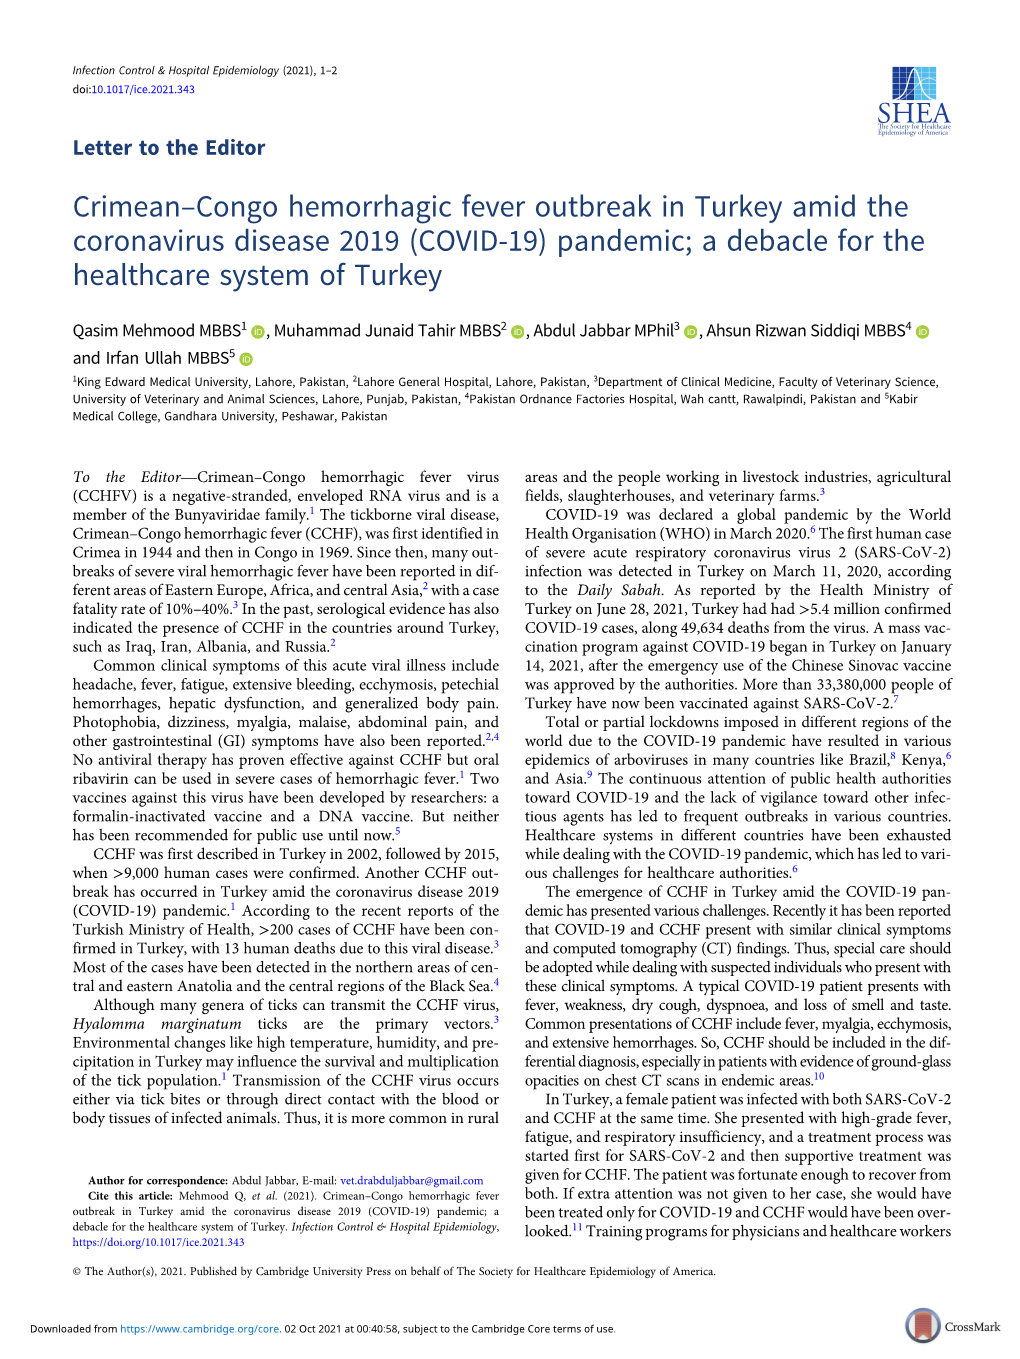 Crimean-Congo Hemorrhagic Fever Outbreak in Turkey Amid the Coronavirus Disease 2019 (COVID-19) Pandemic; a Debacle for the Heal